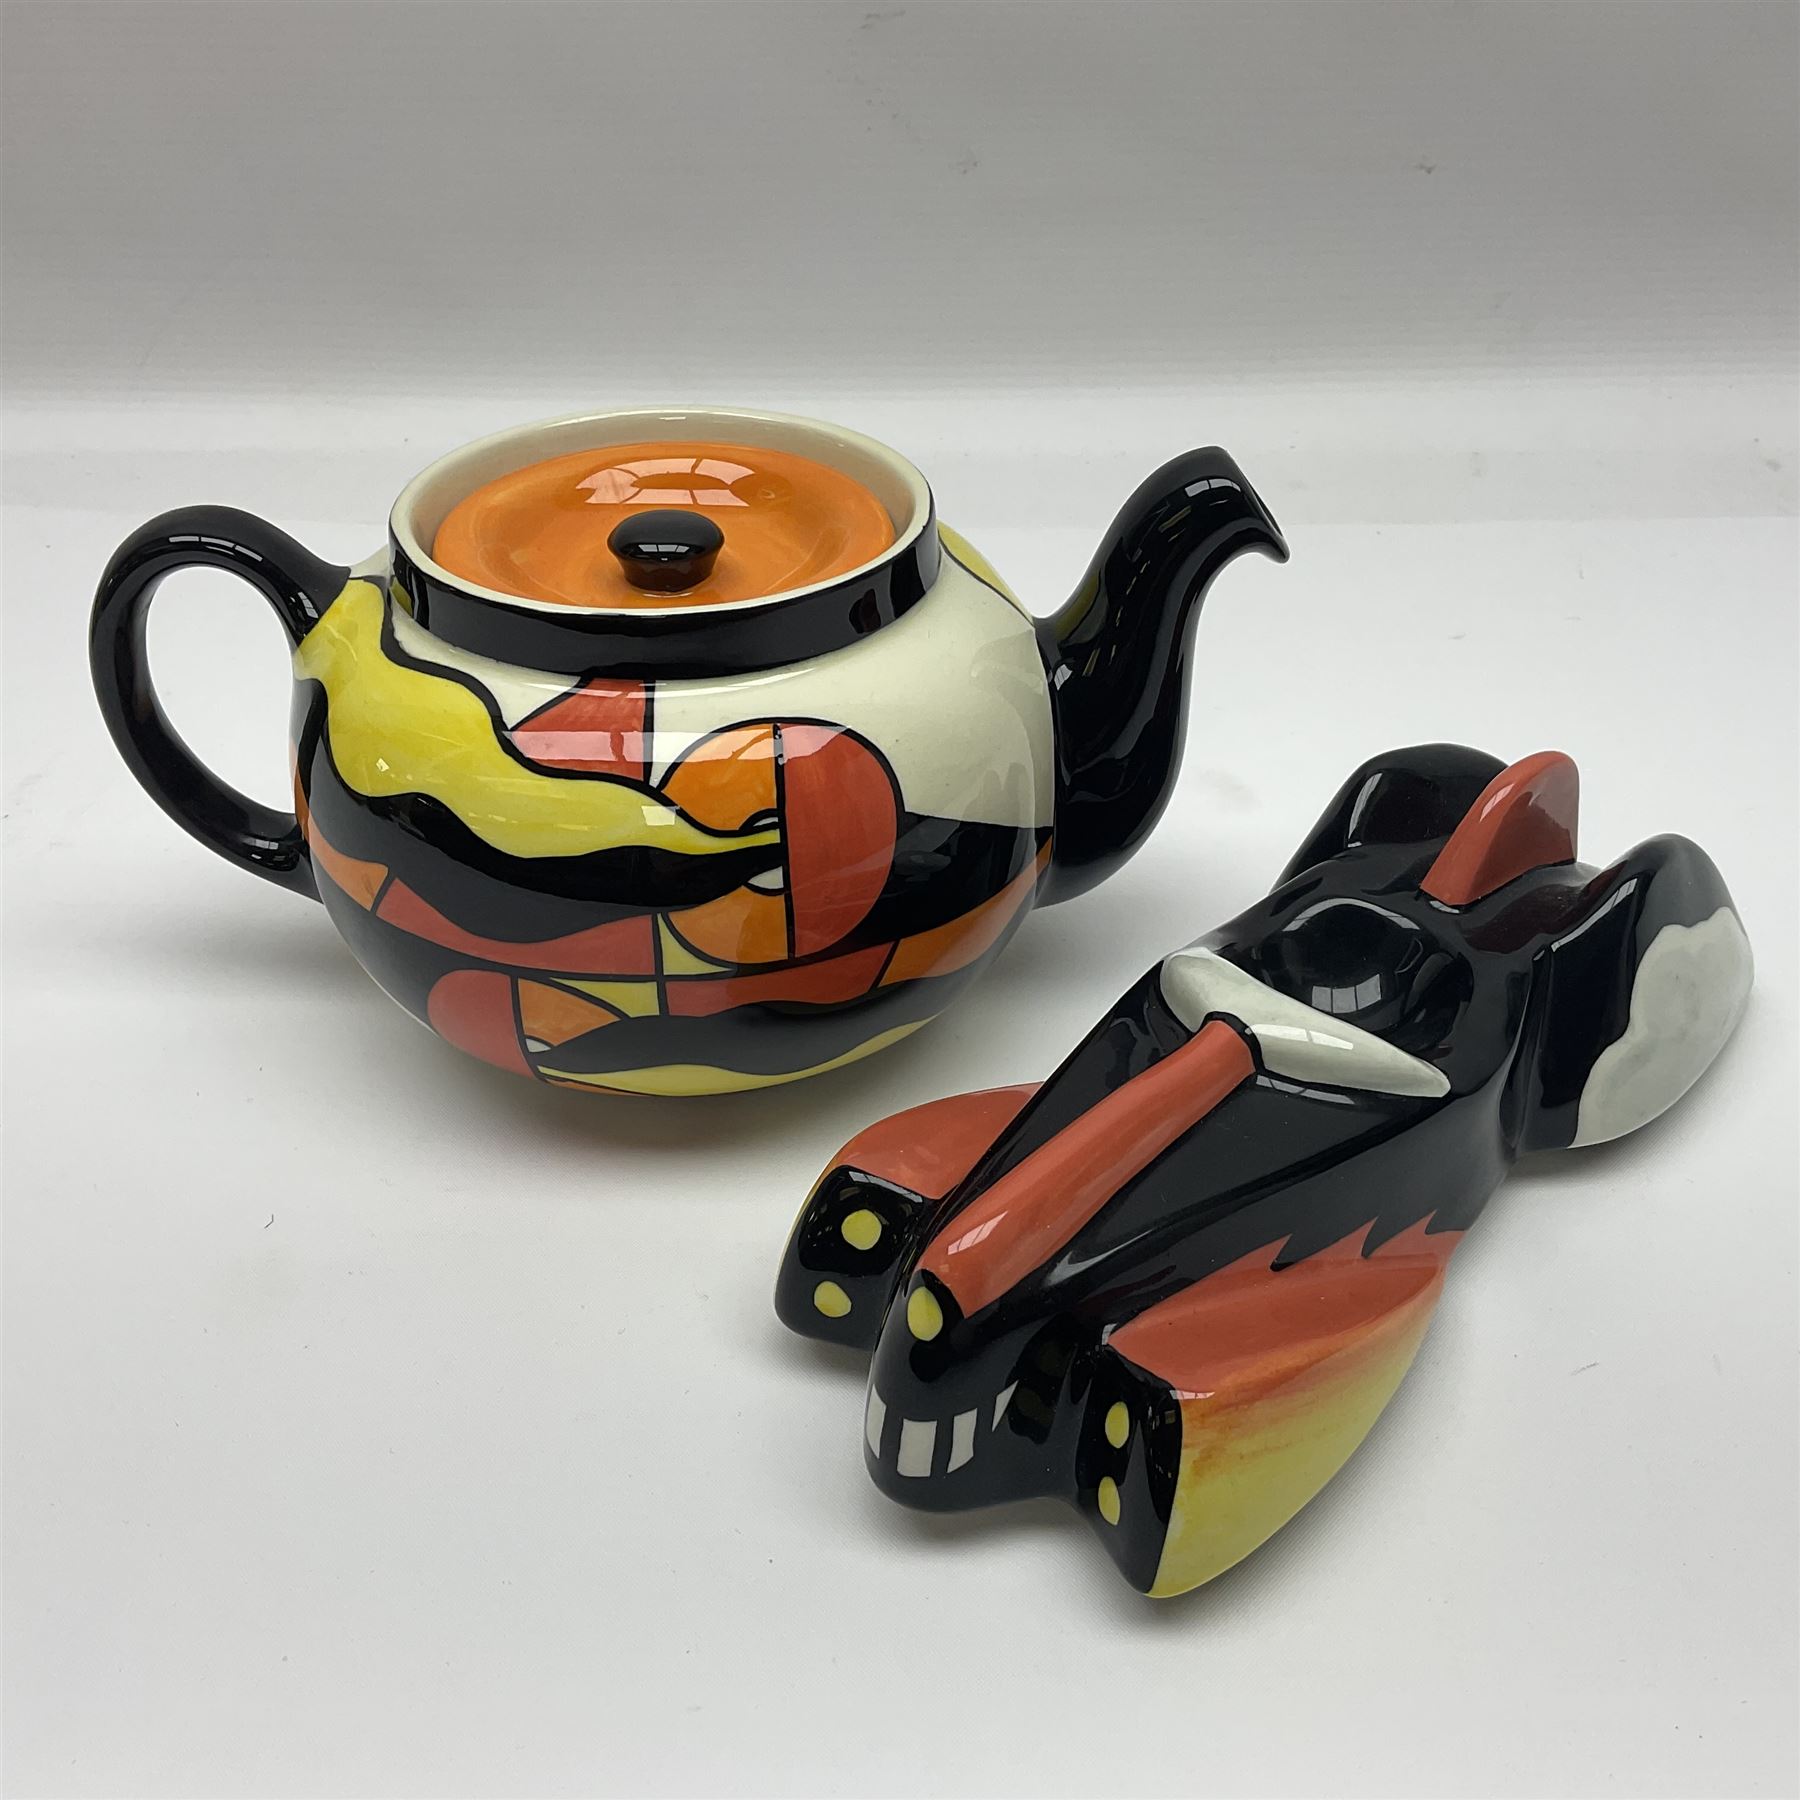 Lorna Bailey Mirage pattern teapot - Image 5 of 12